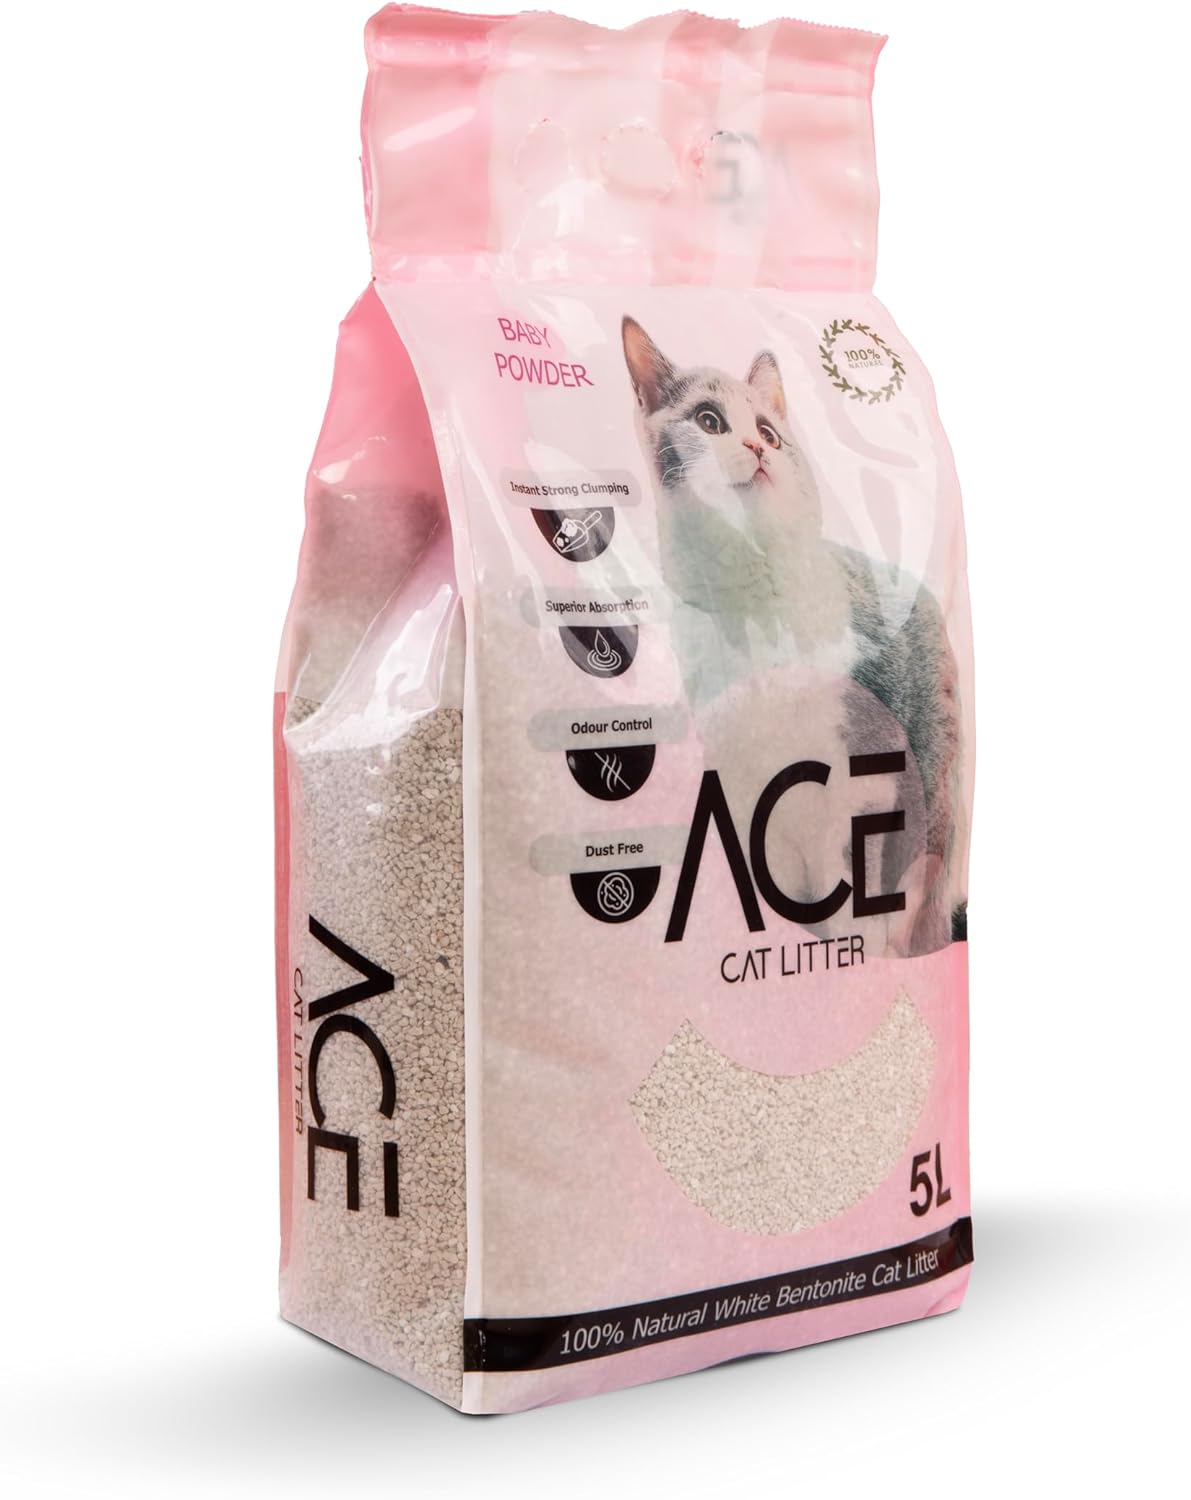 ACE Baby Powder CAT LITTER, 5 L